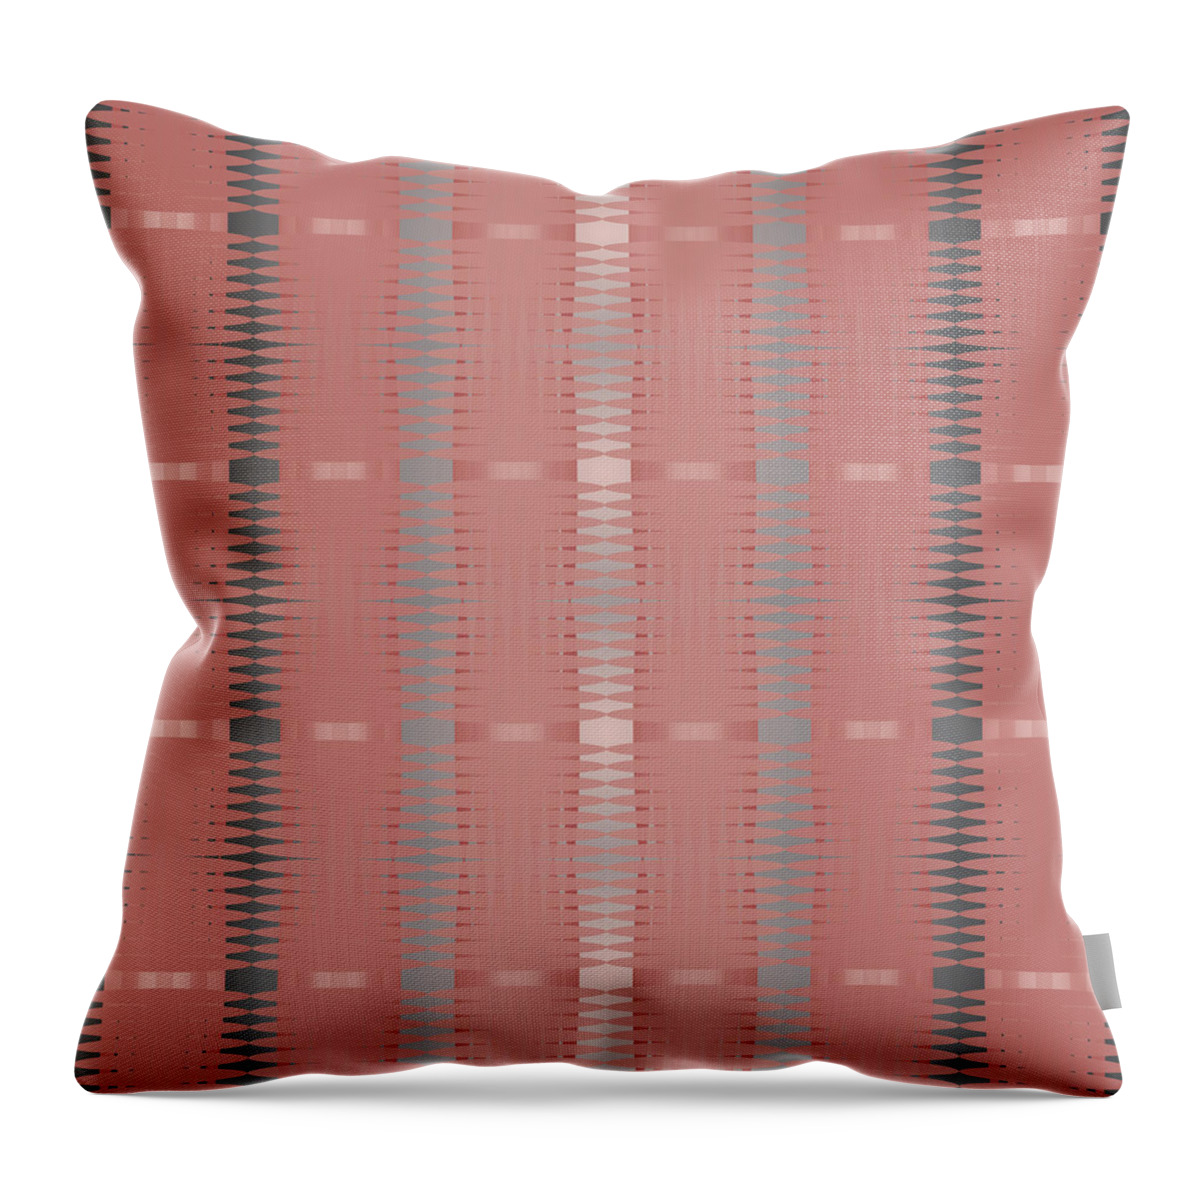 Marsala Throw Pillow featuring the digital art Marsala Stripe by Kevin McLaughlin